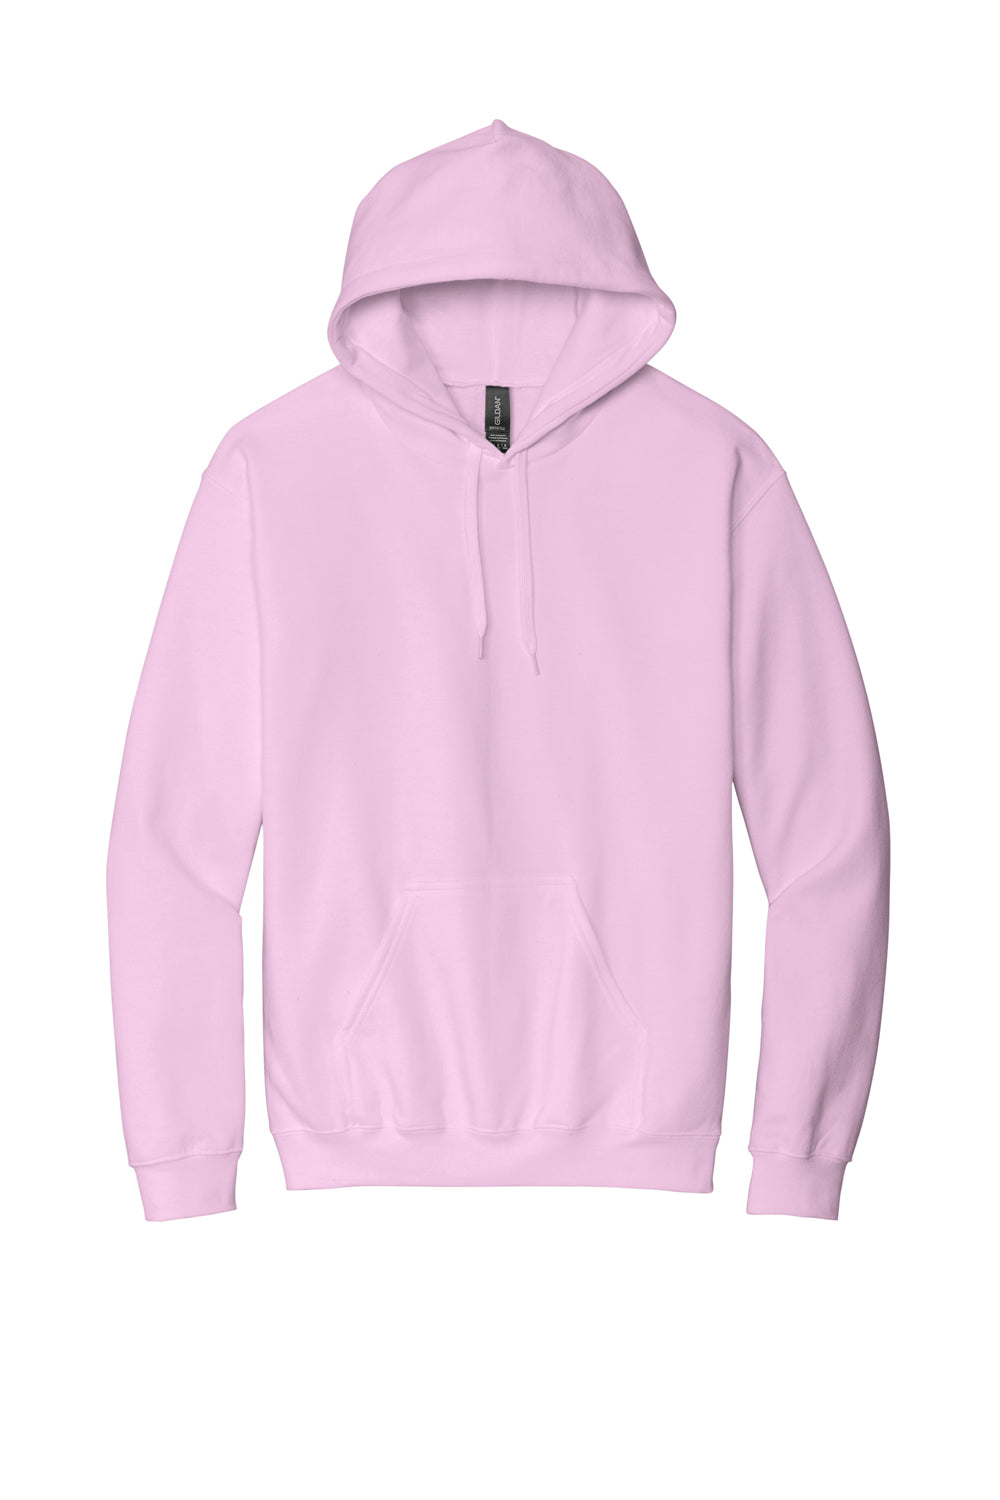 Gildan SF500 Softstyle Hooded Sweatshirt Hoodie Light Pink Flat Front